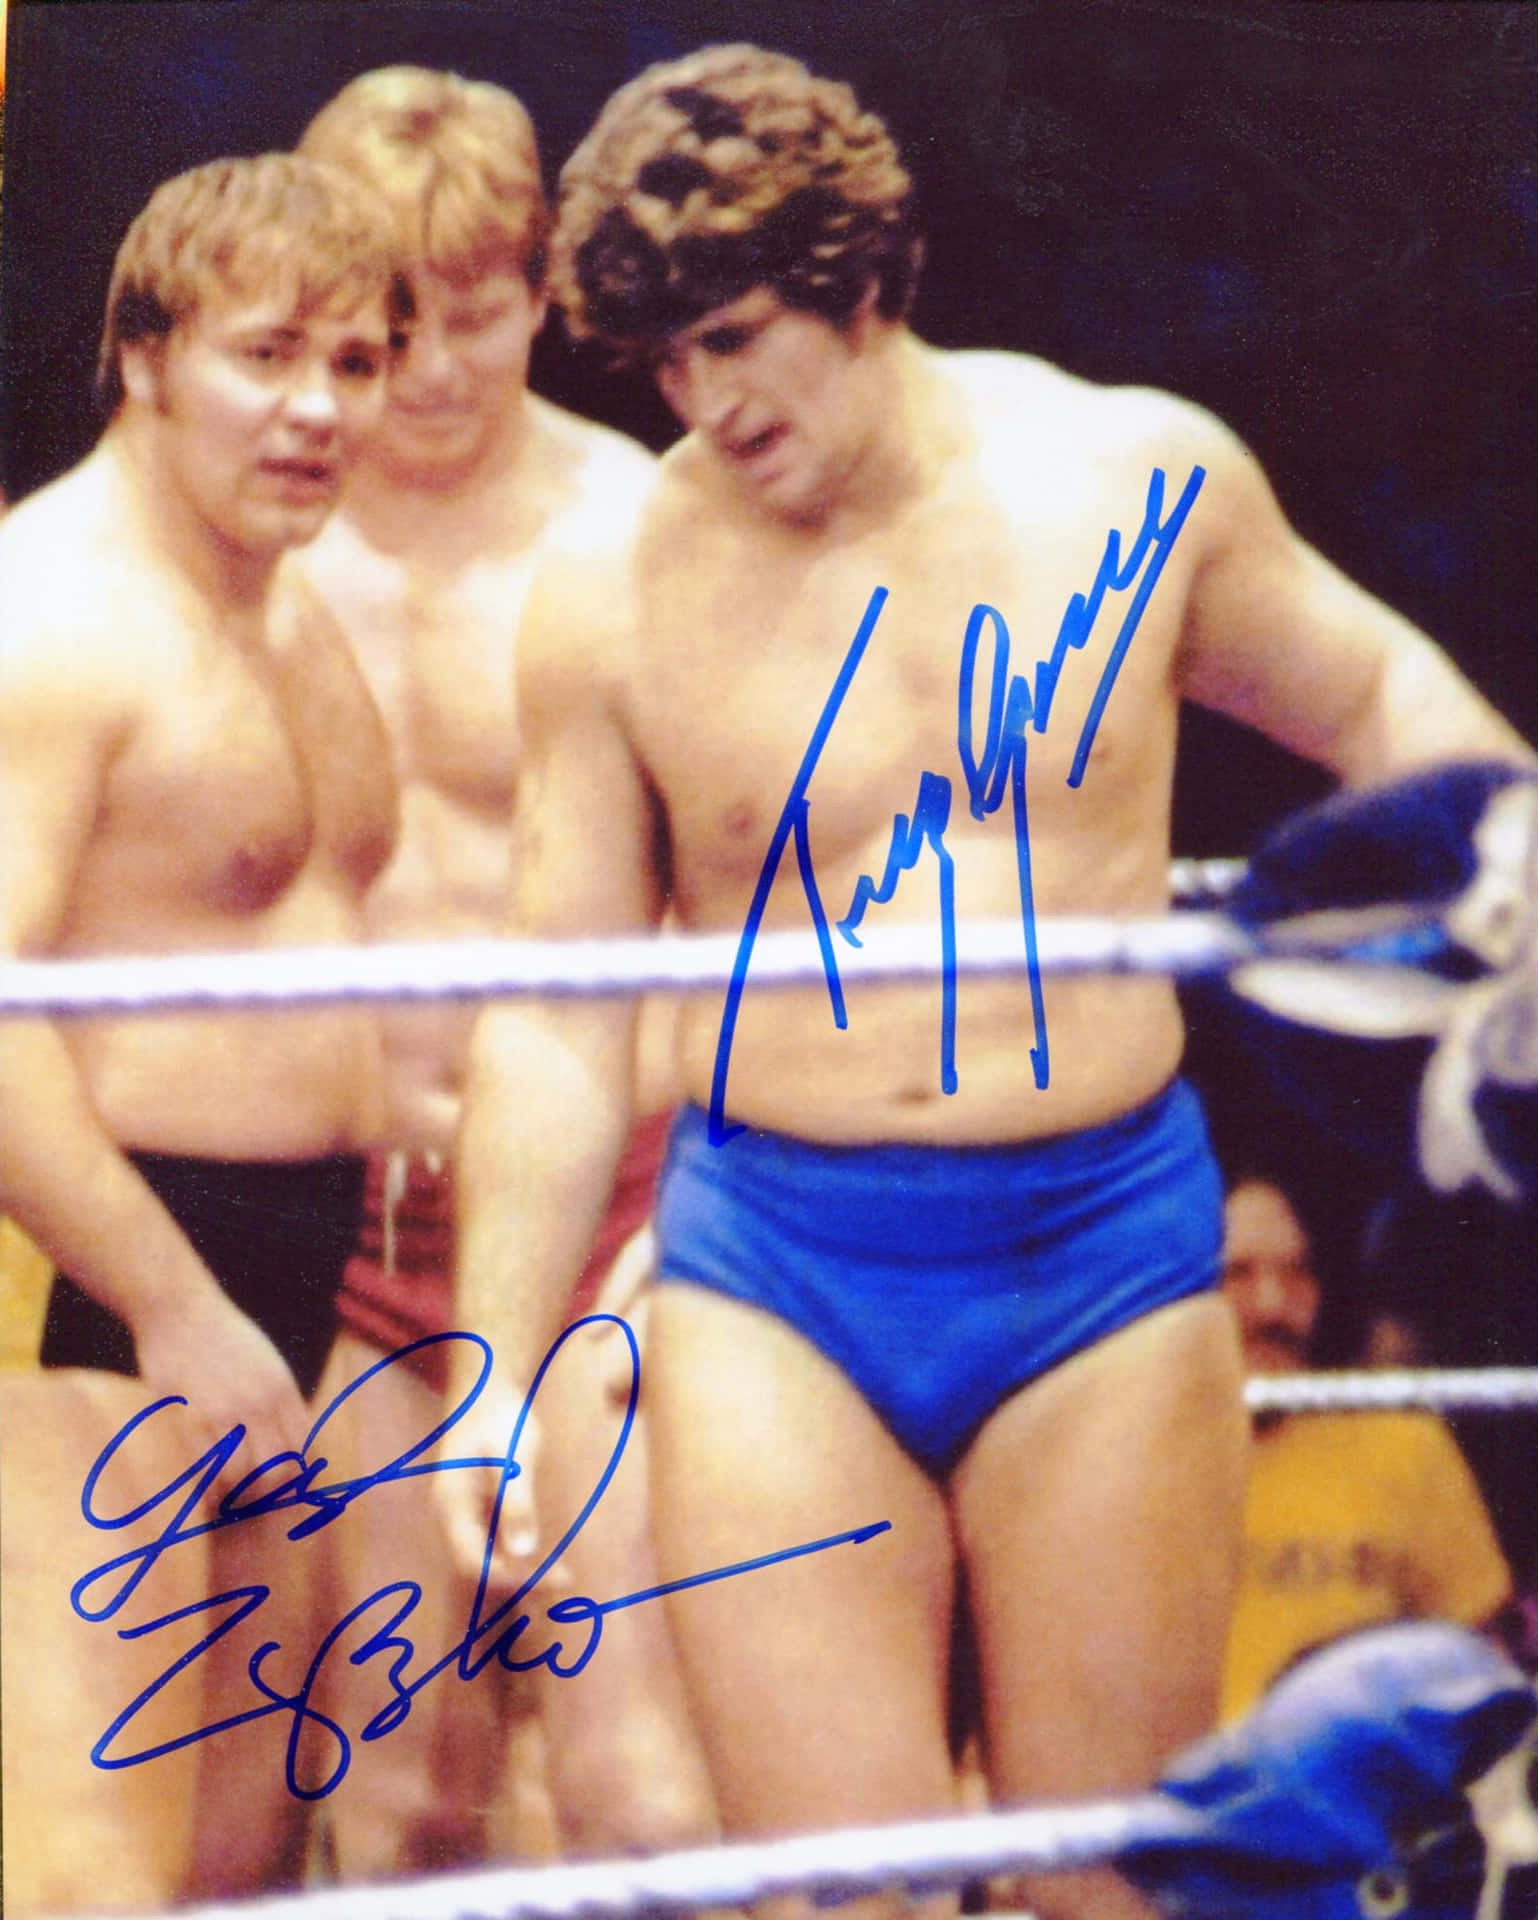 Wrestlers Larry Zbyszko And Tony Garea Autograph Wallpaper